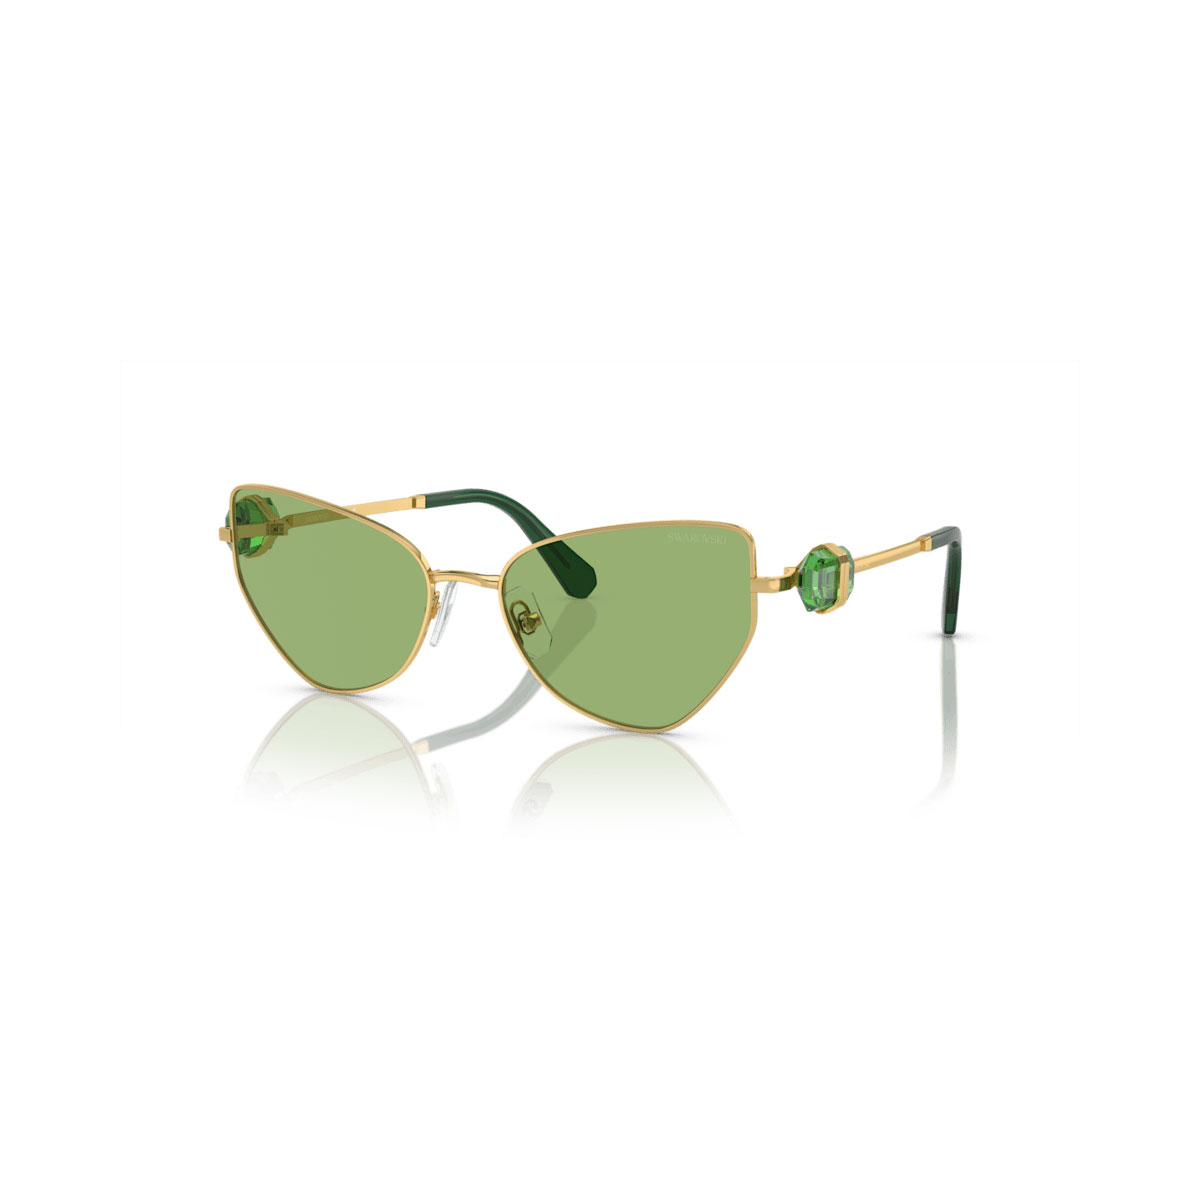 Swarovski Sunglasses, Cat-eye shape, Green